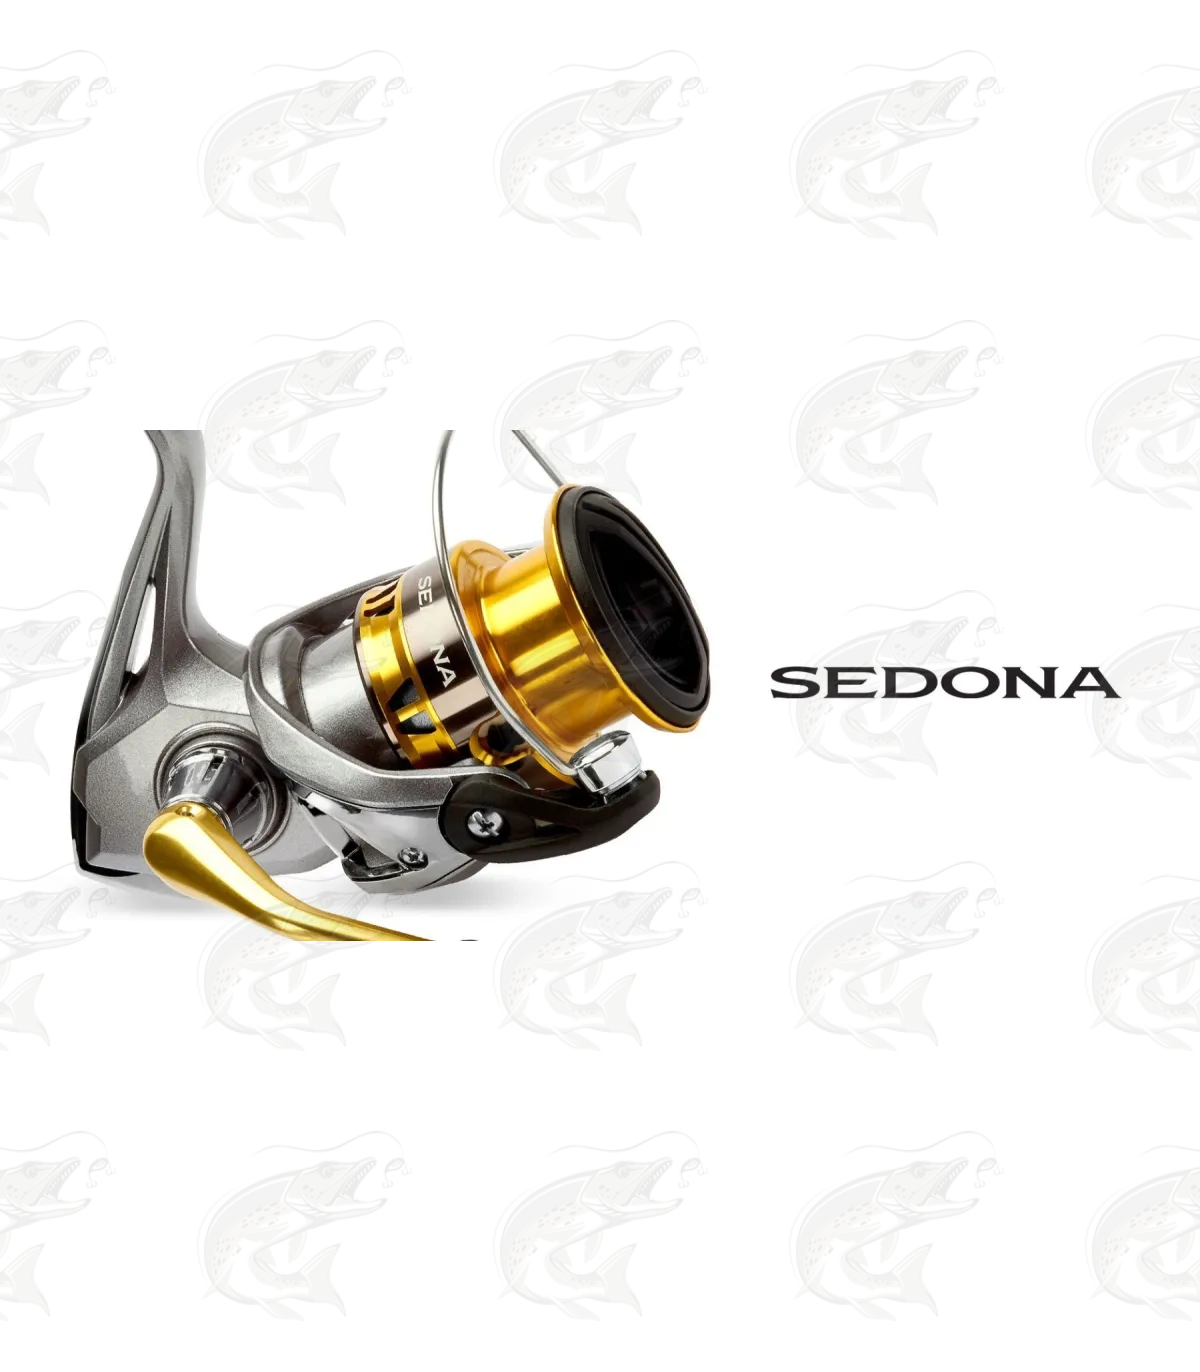 SE1000FI Spinning reel with front drag Shimano Sedona 1000 FI 